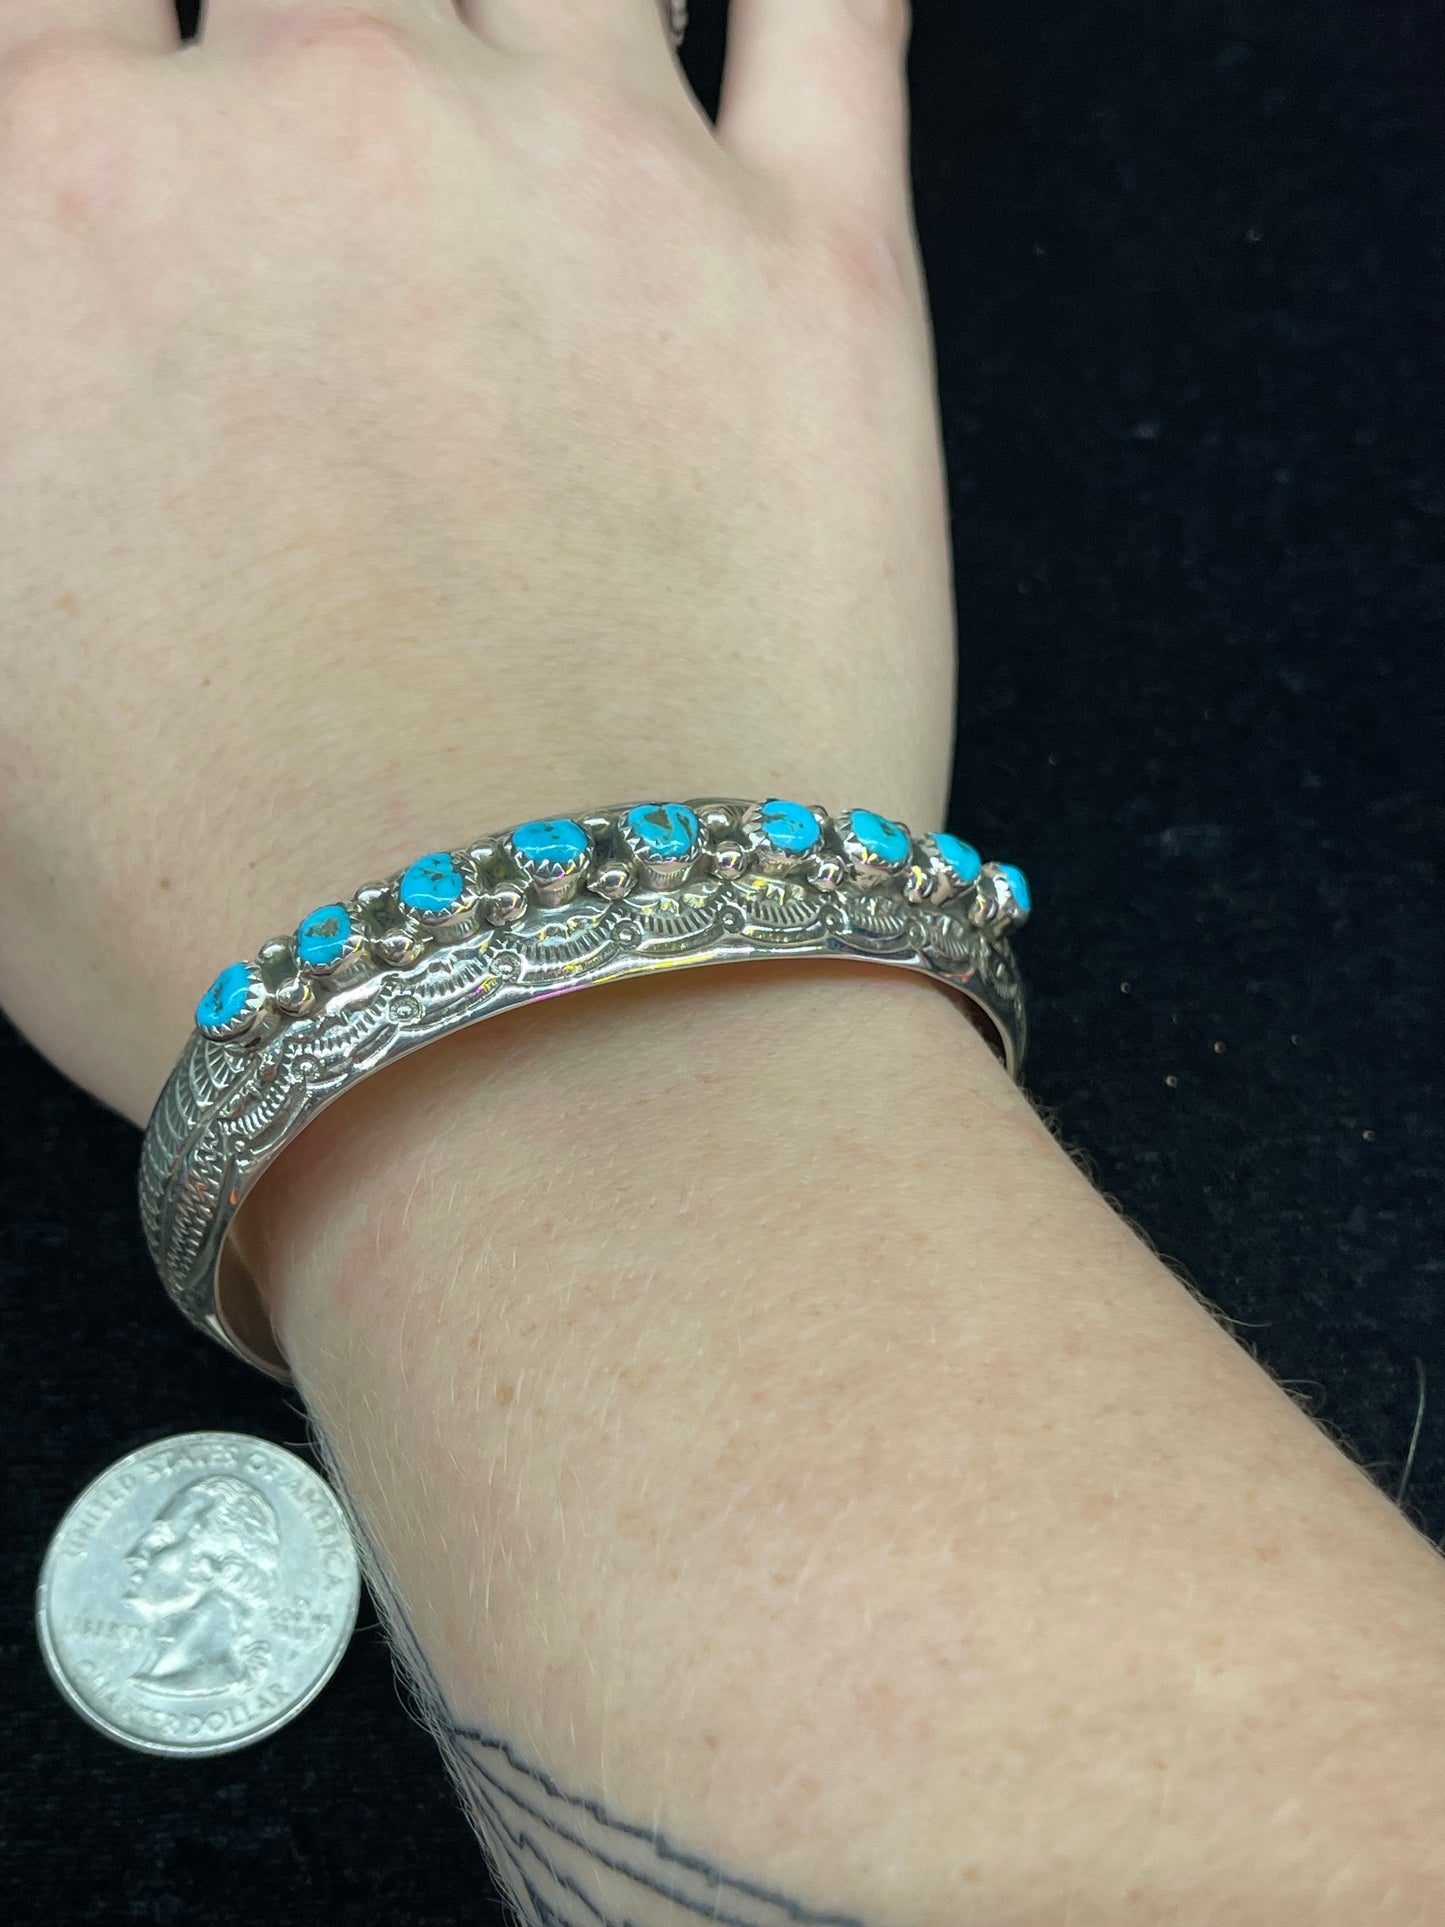 Turquoise Stone Cuff Bracelet by Glen & Irene Sandoval